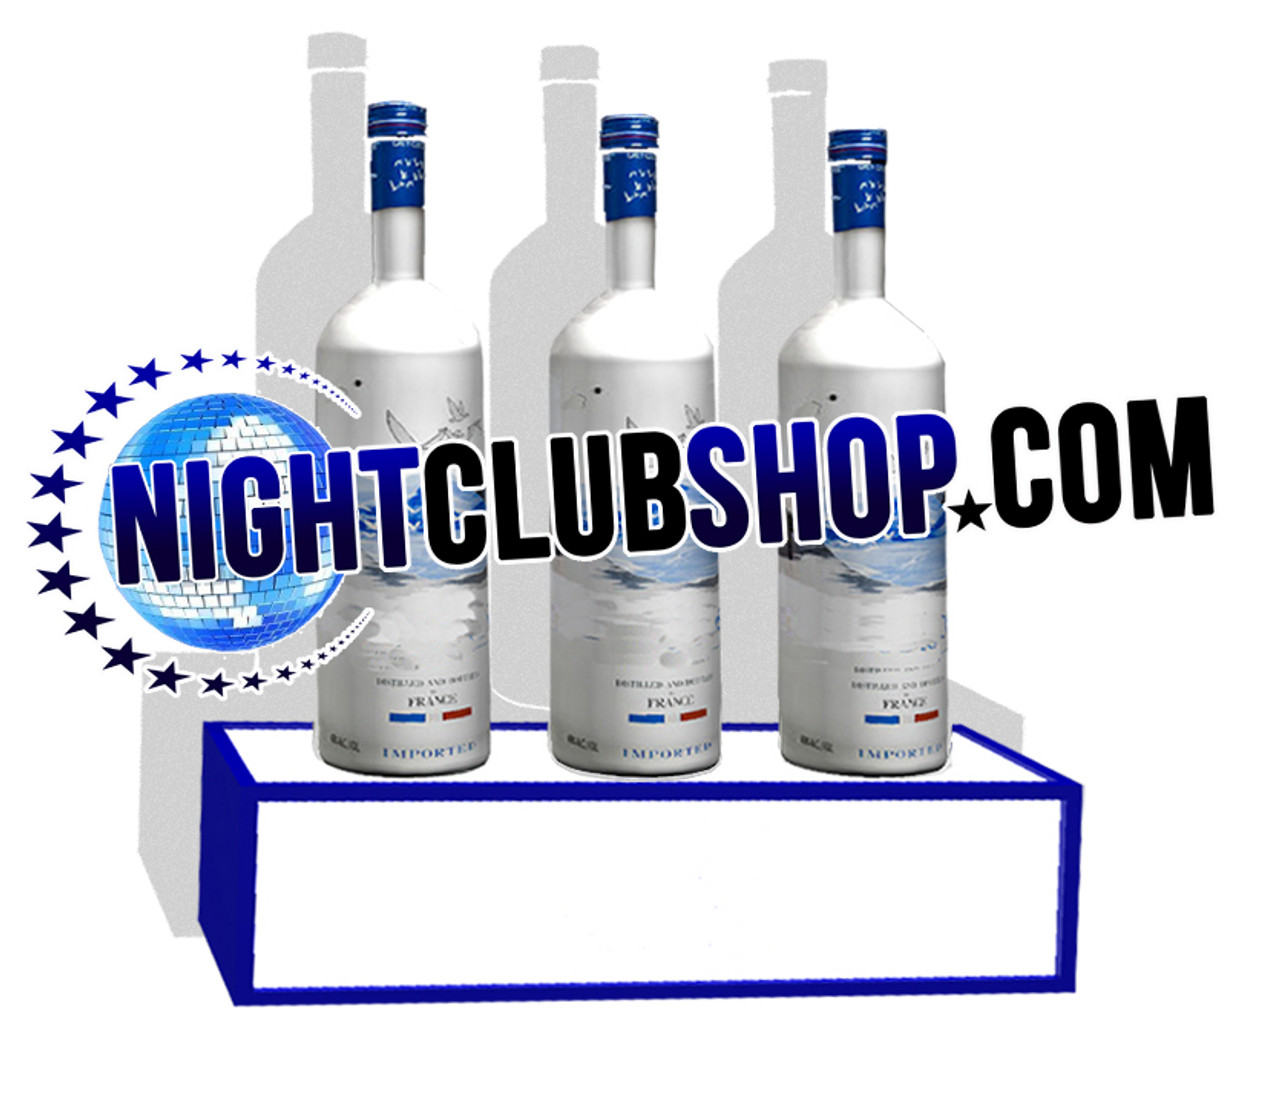 Brand, custom, personalized, Bar, stand, shelf, Liquor, Bottle, Base, engrave, etch, print, Light up, illuminated, Nightclubshop, custom shop